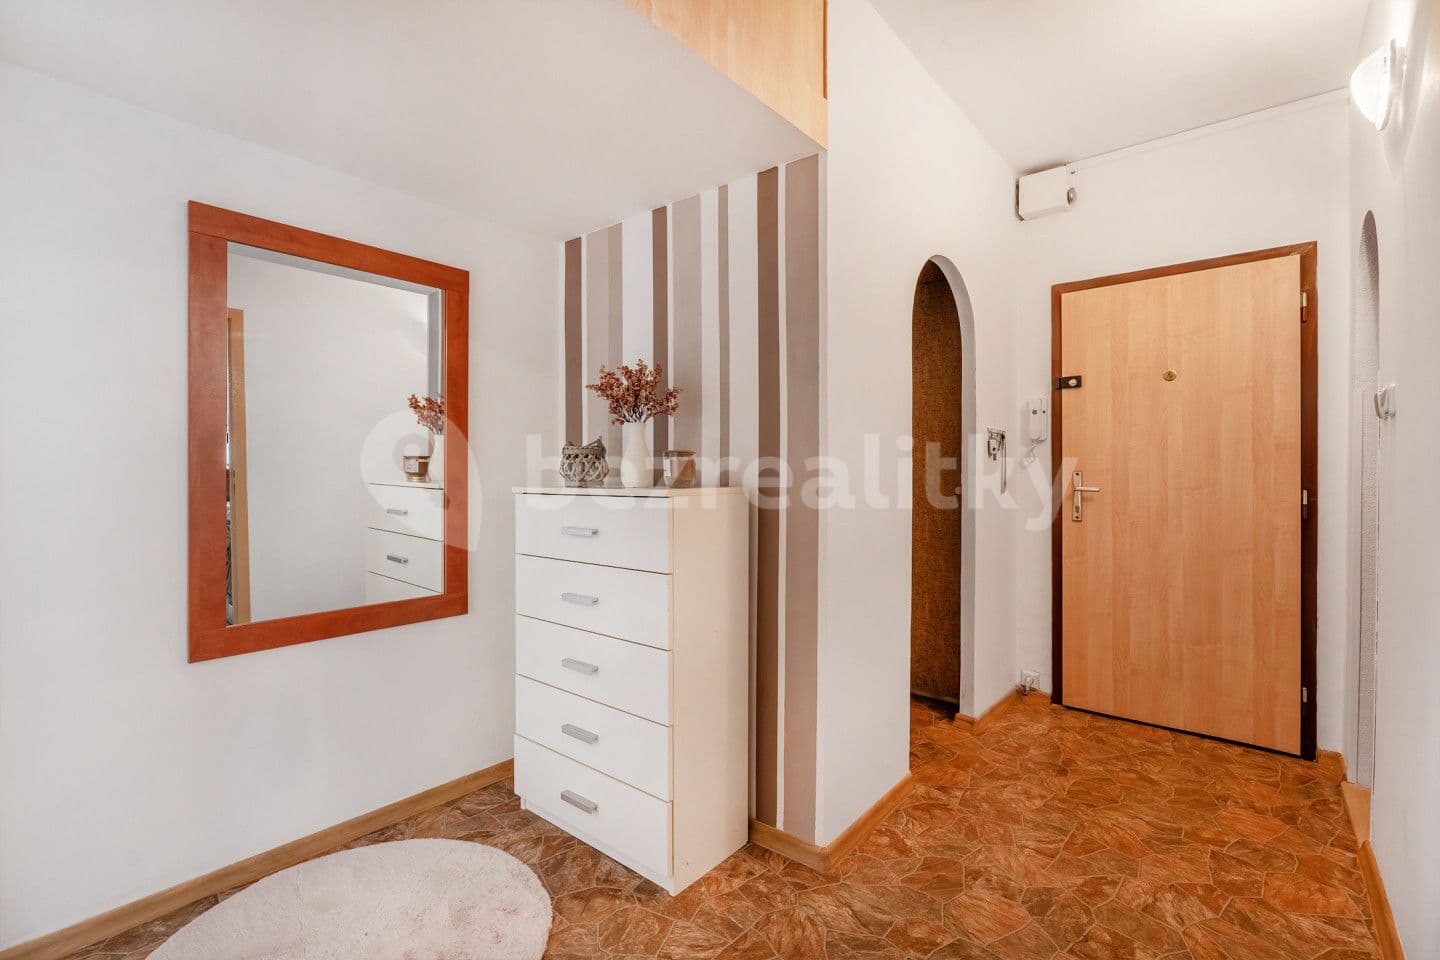 2 bedroom flat for sale, 53 m², Hluboká, Ústí nad Labem, Ústecký Region